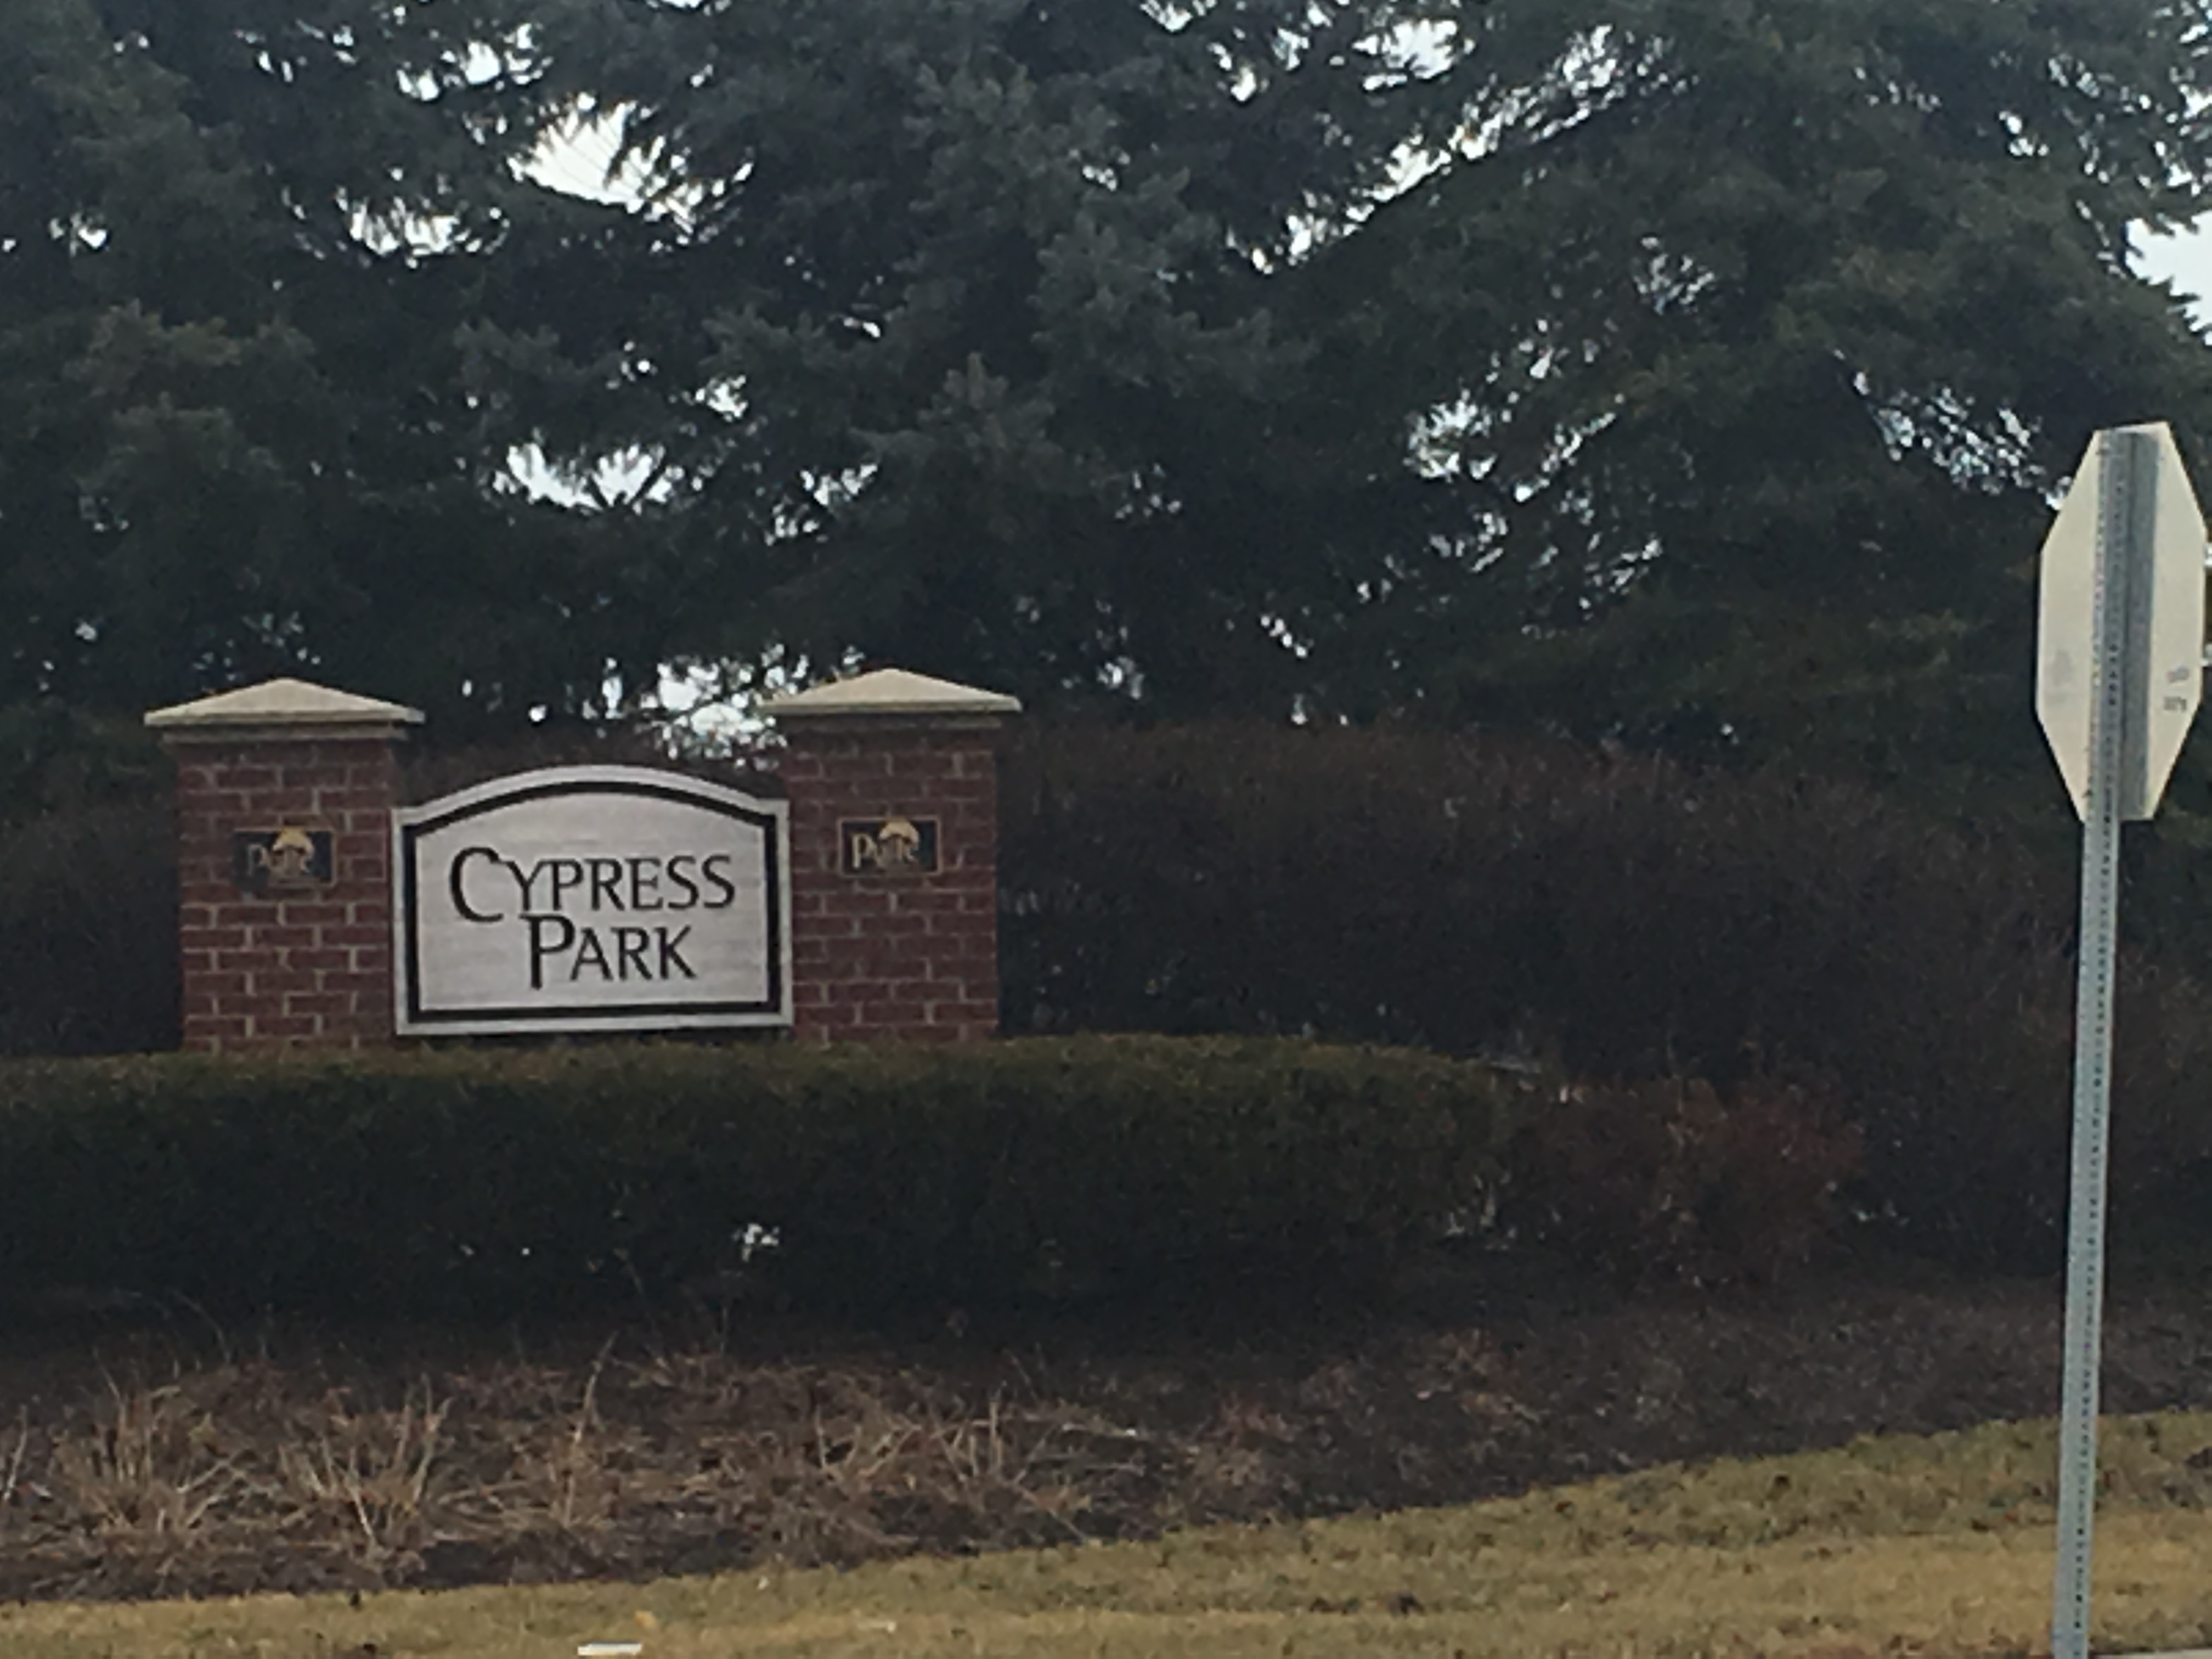 Cypress Park, Zion, IL, Pic 1